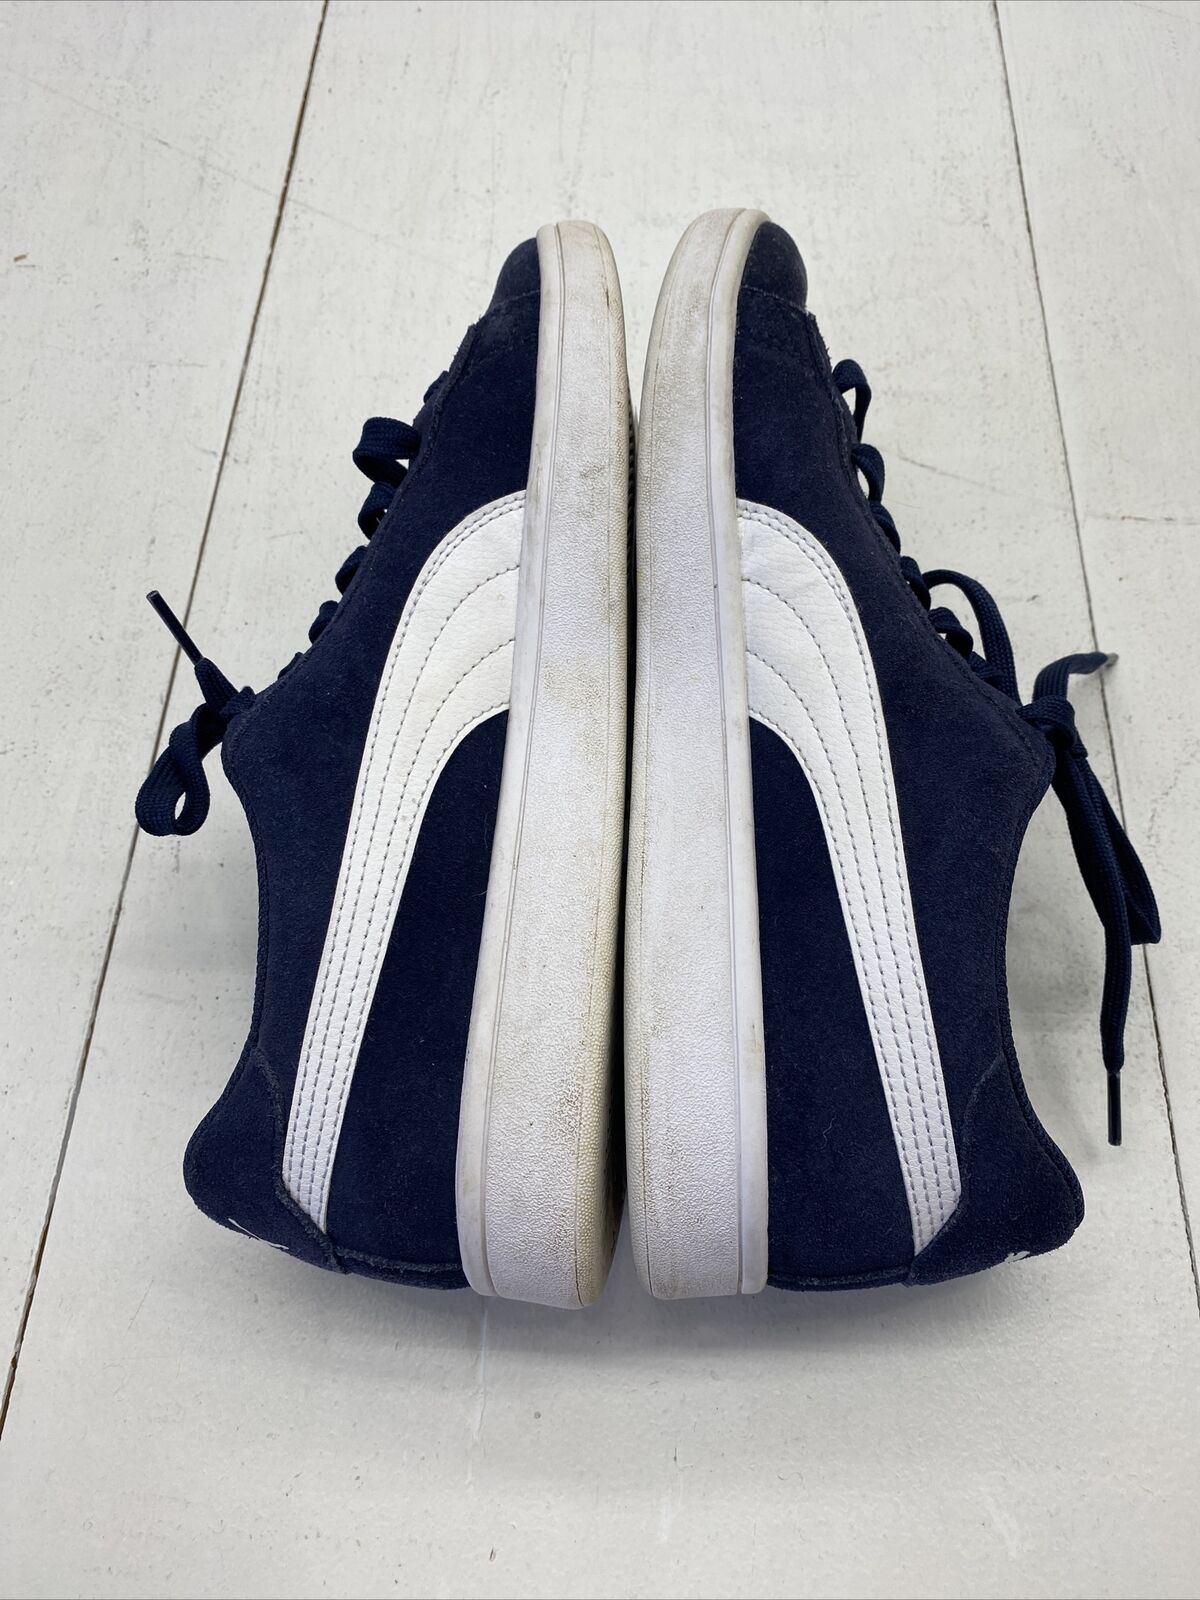 PUMA Suede Smash v2 Sneaker Soft Foam Men's Shoes, Navy Blue, Size 10.5